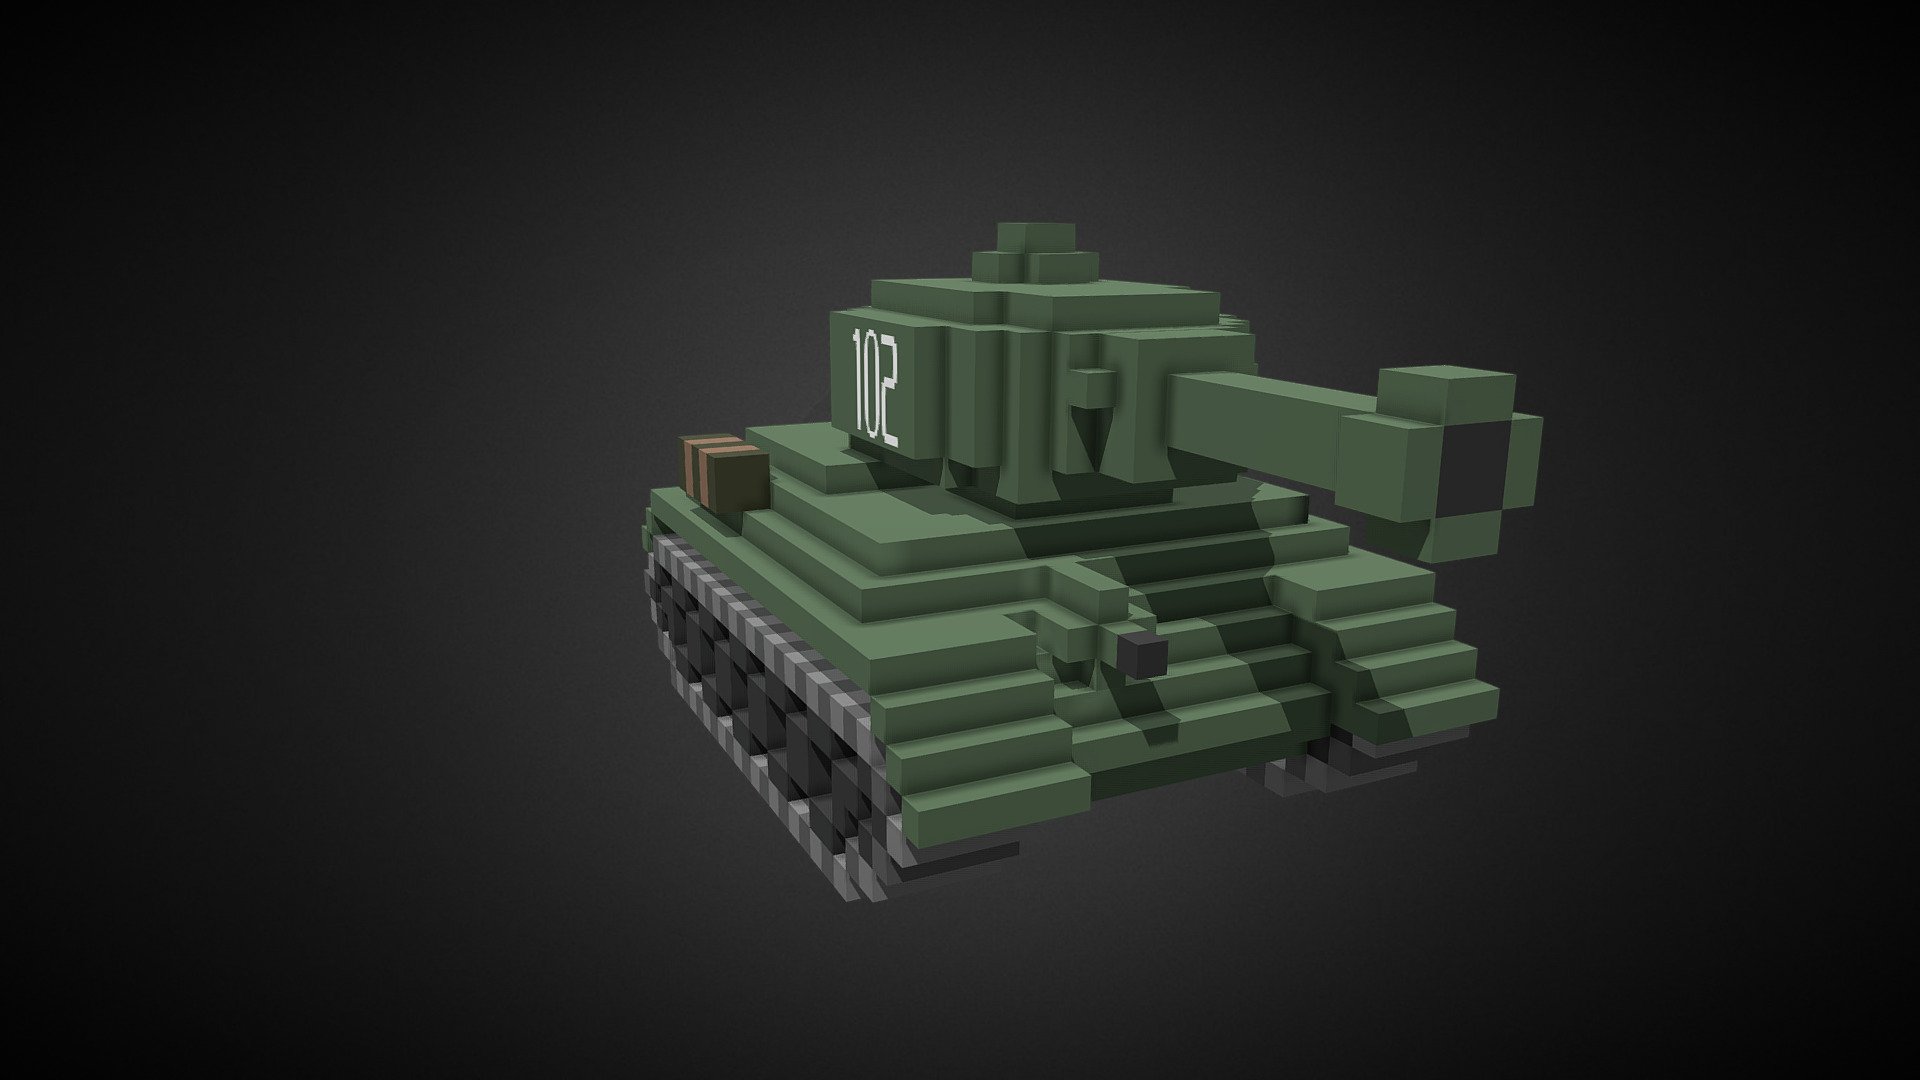 Fifine tank 3. Танк пиксель 3д. Воксельный танк кв1. Пиксельный танк 2д. Танк 2д ,n6.